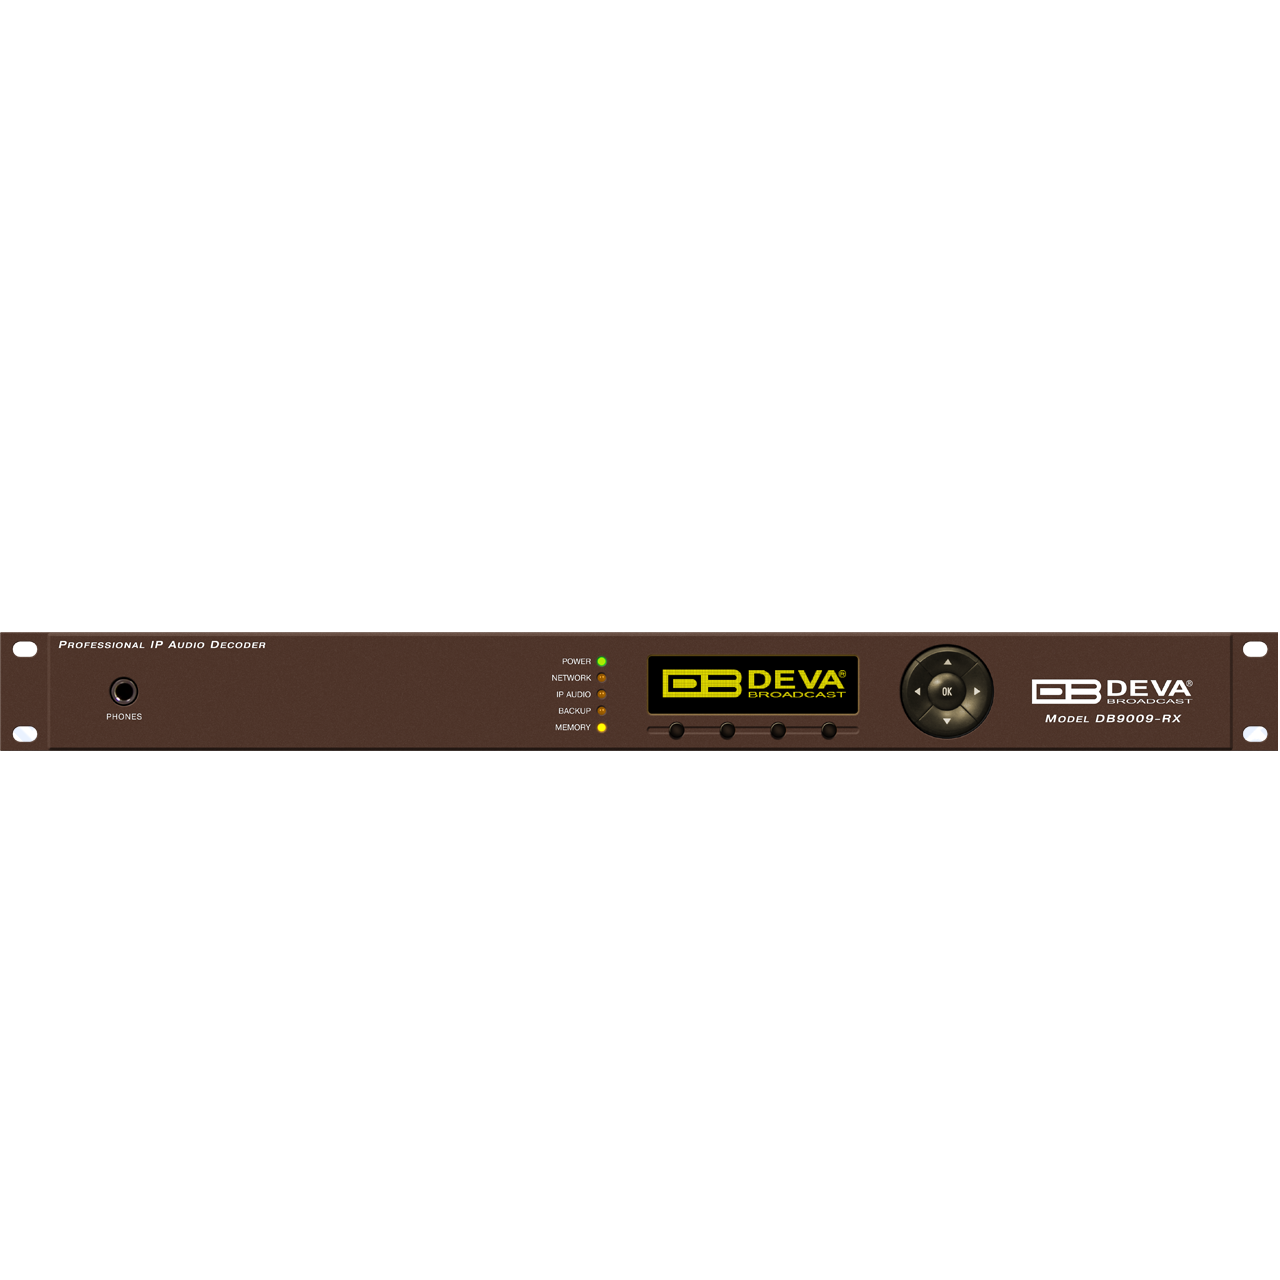 Контроллеры DEVA Broadcast DB9009-RX контроллеры deva broadcast db9009 rx